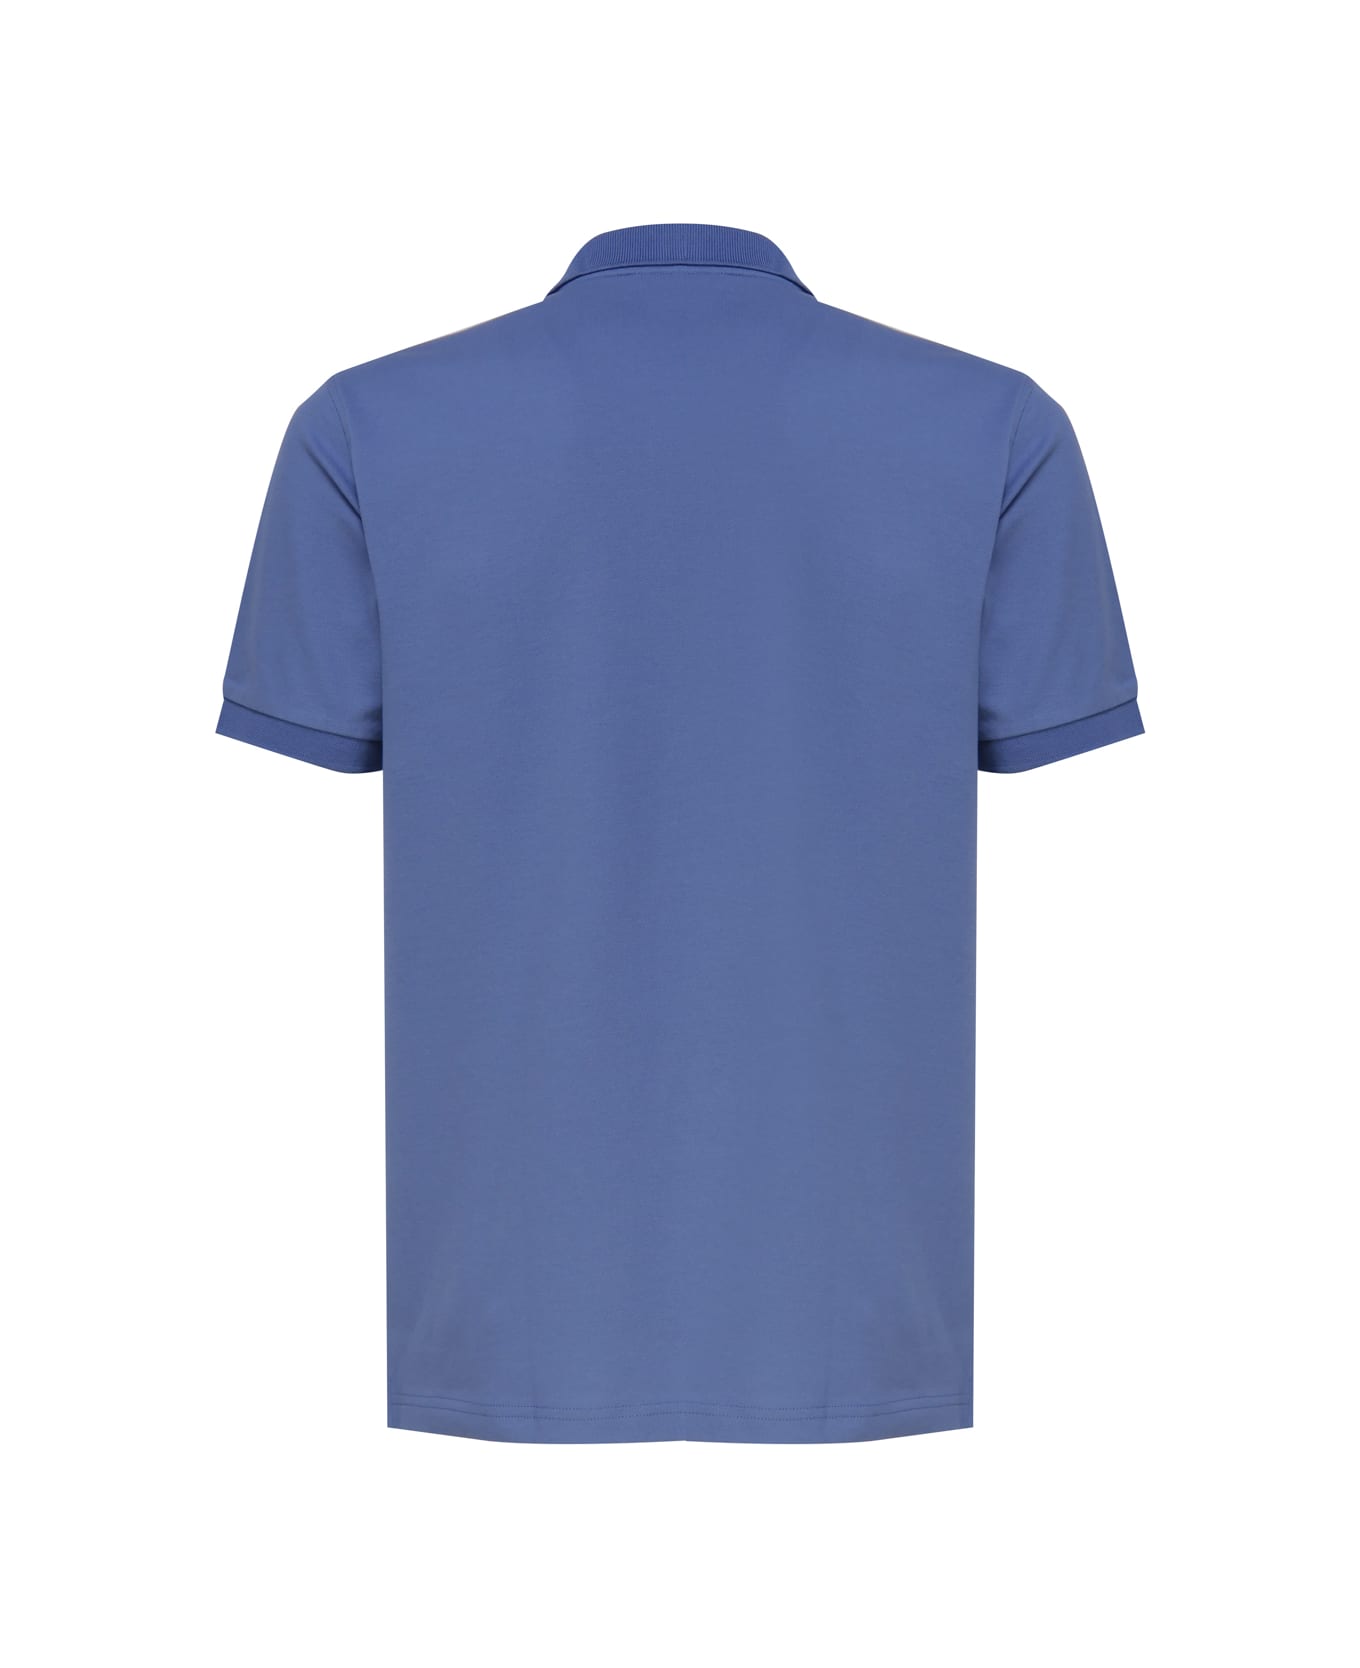 Sun 68 Polo T-shirt In Cotton - LIGHT BLUE